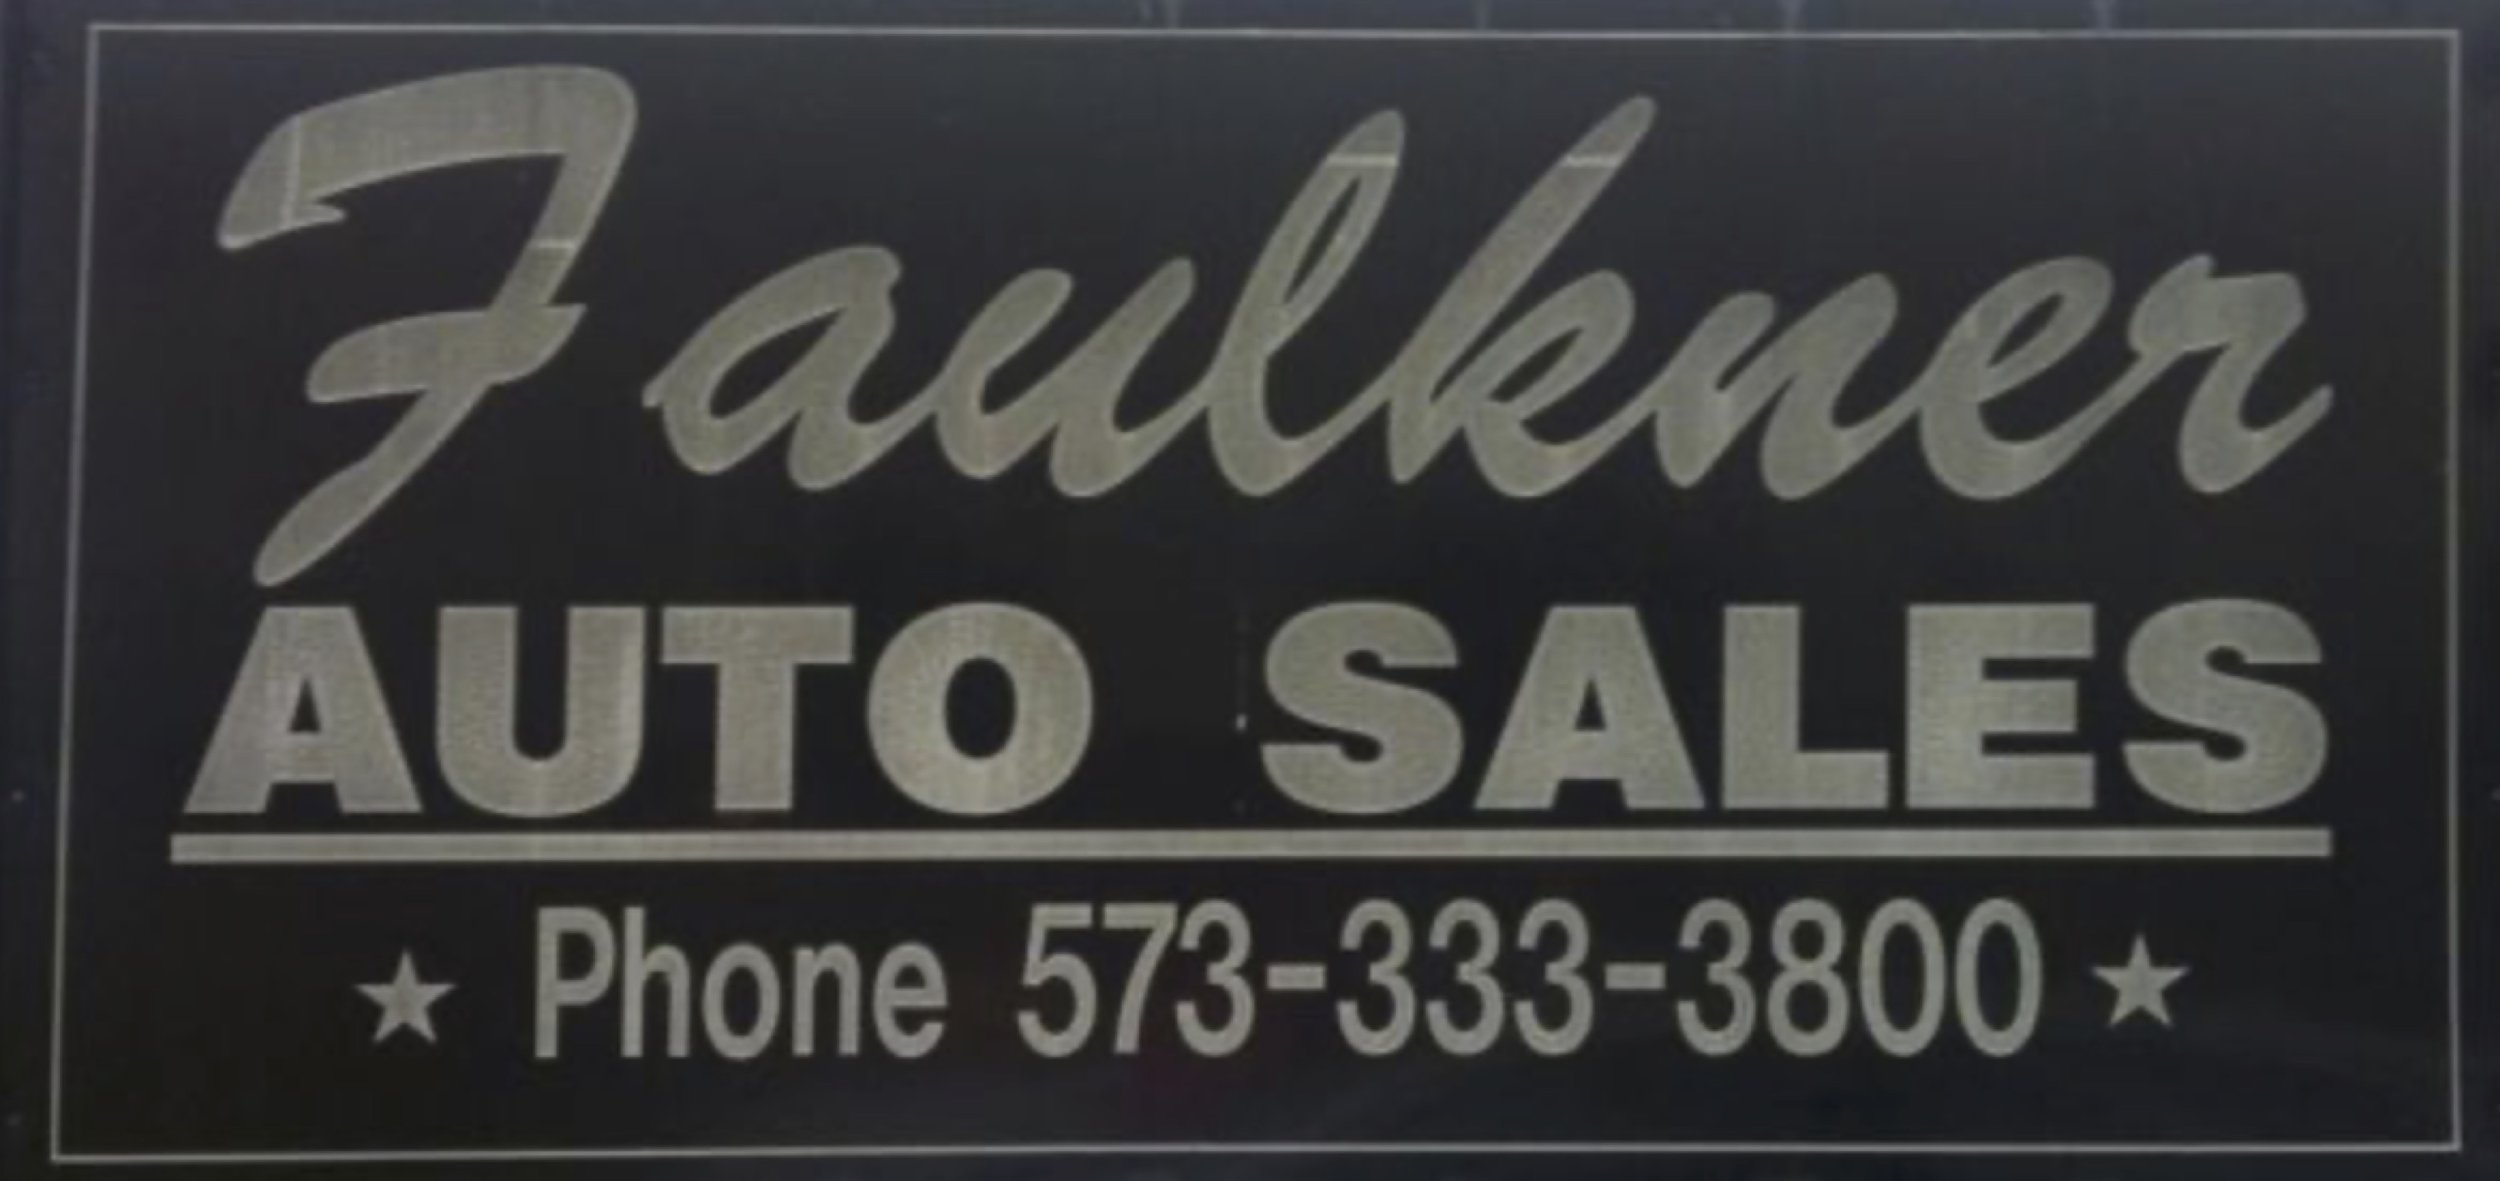 Faulkner Auto Sales.jpg